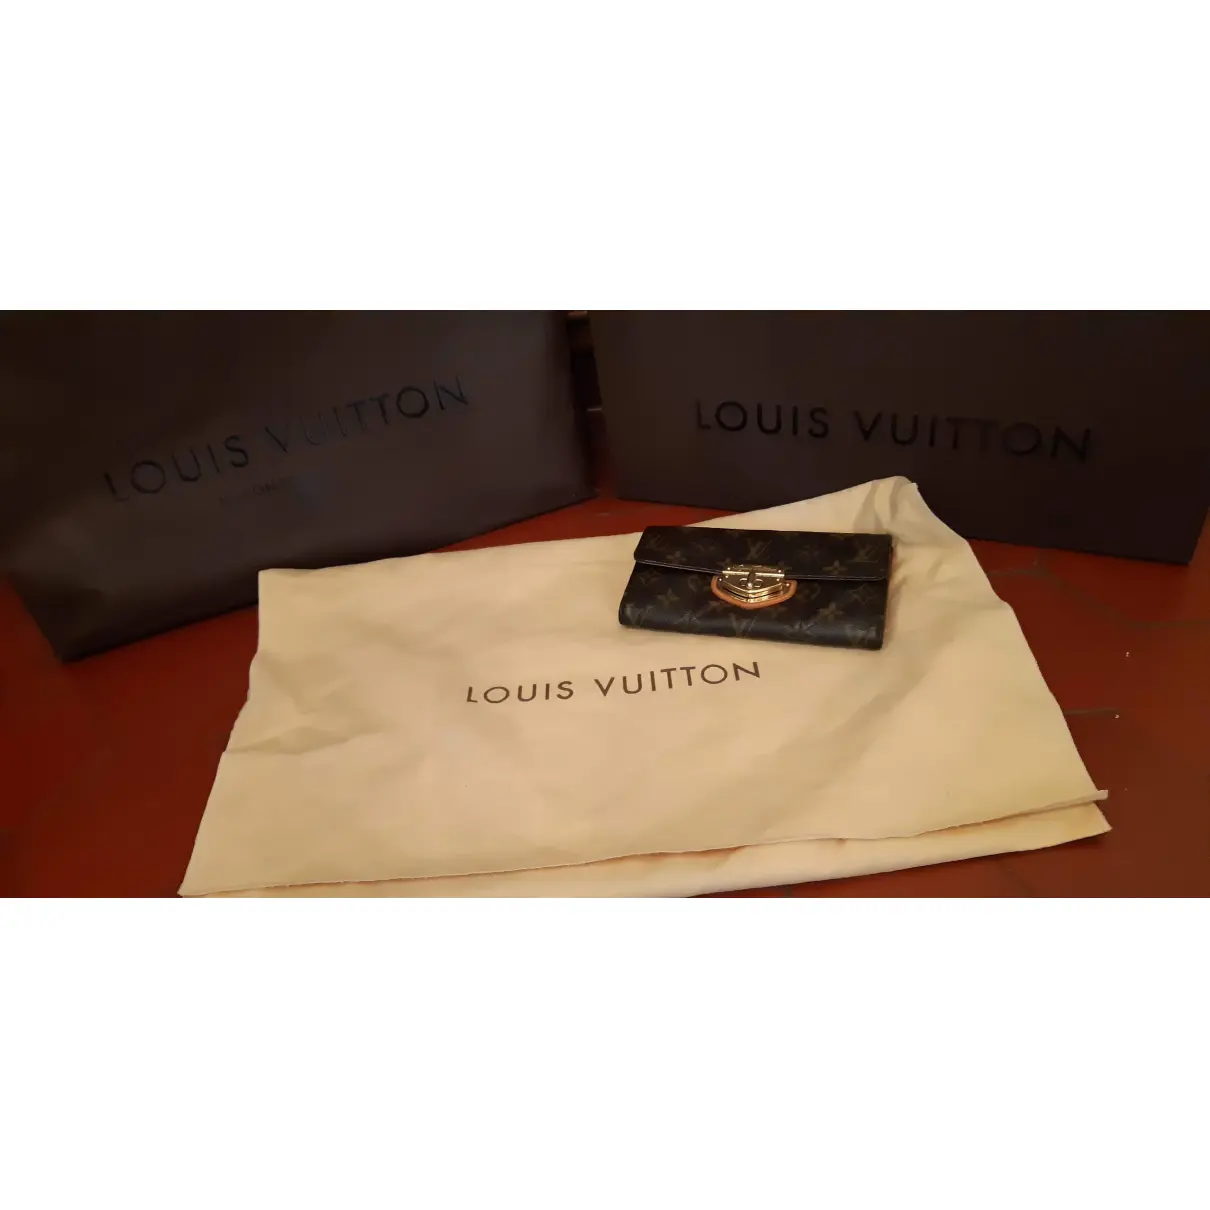 Buy Louis Vuitton Etoile cloth tote online